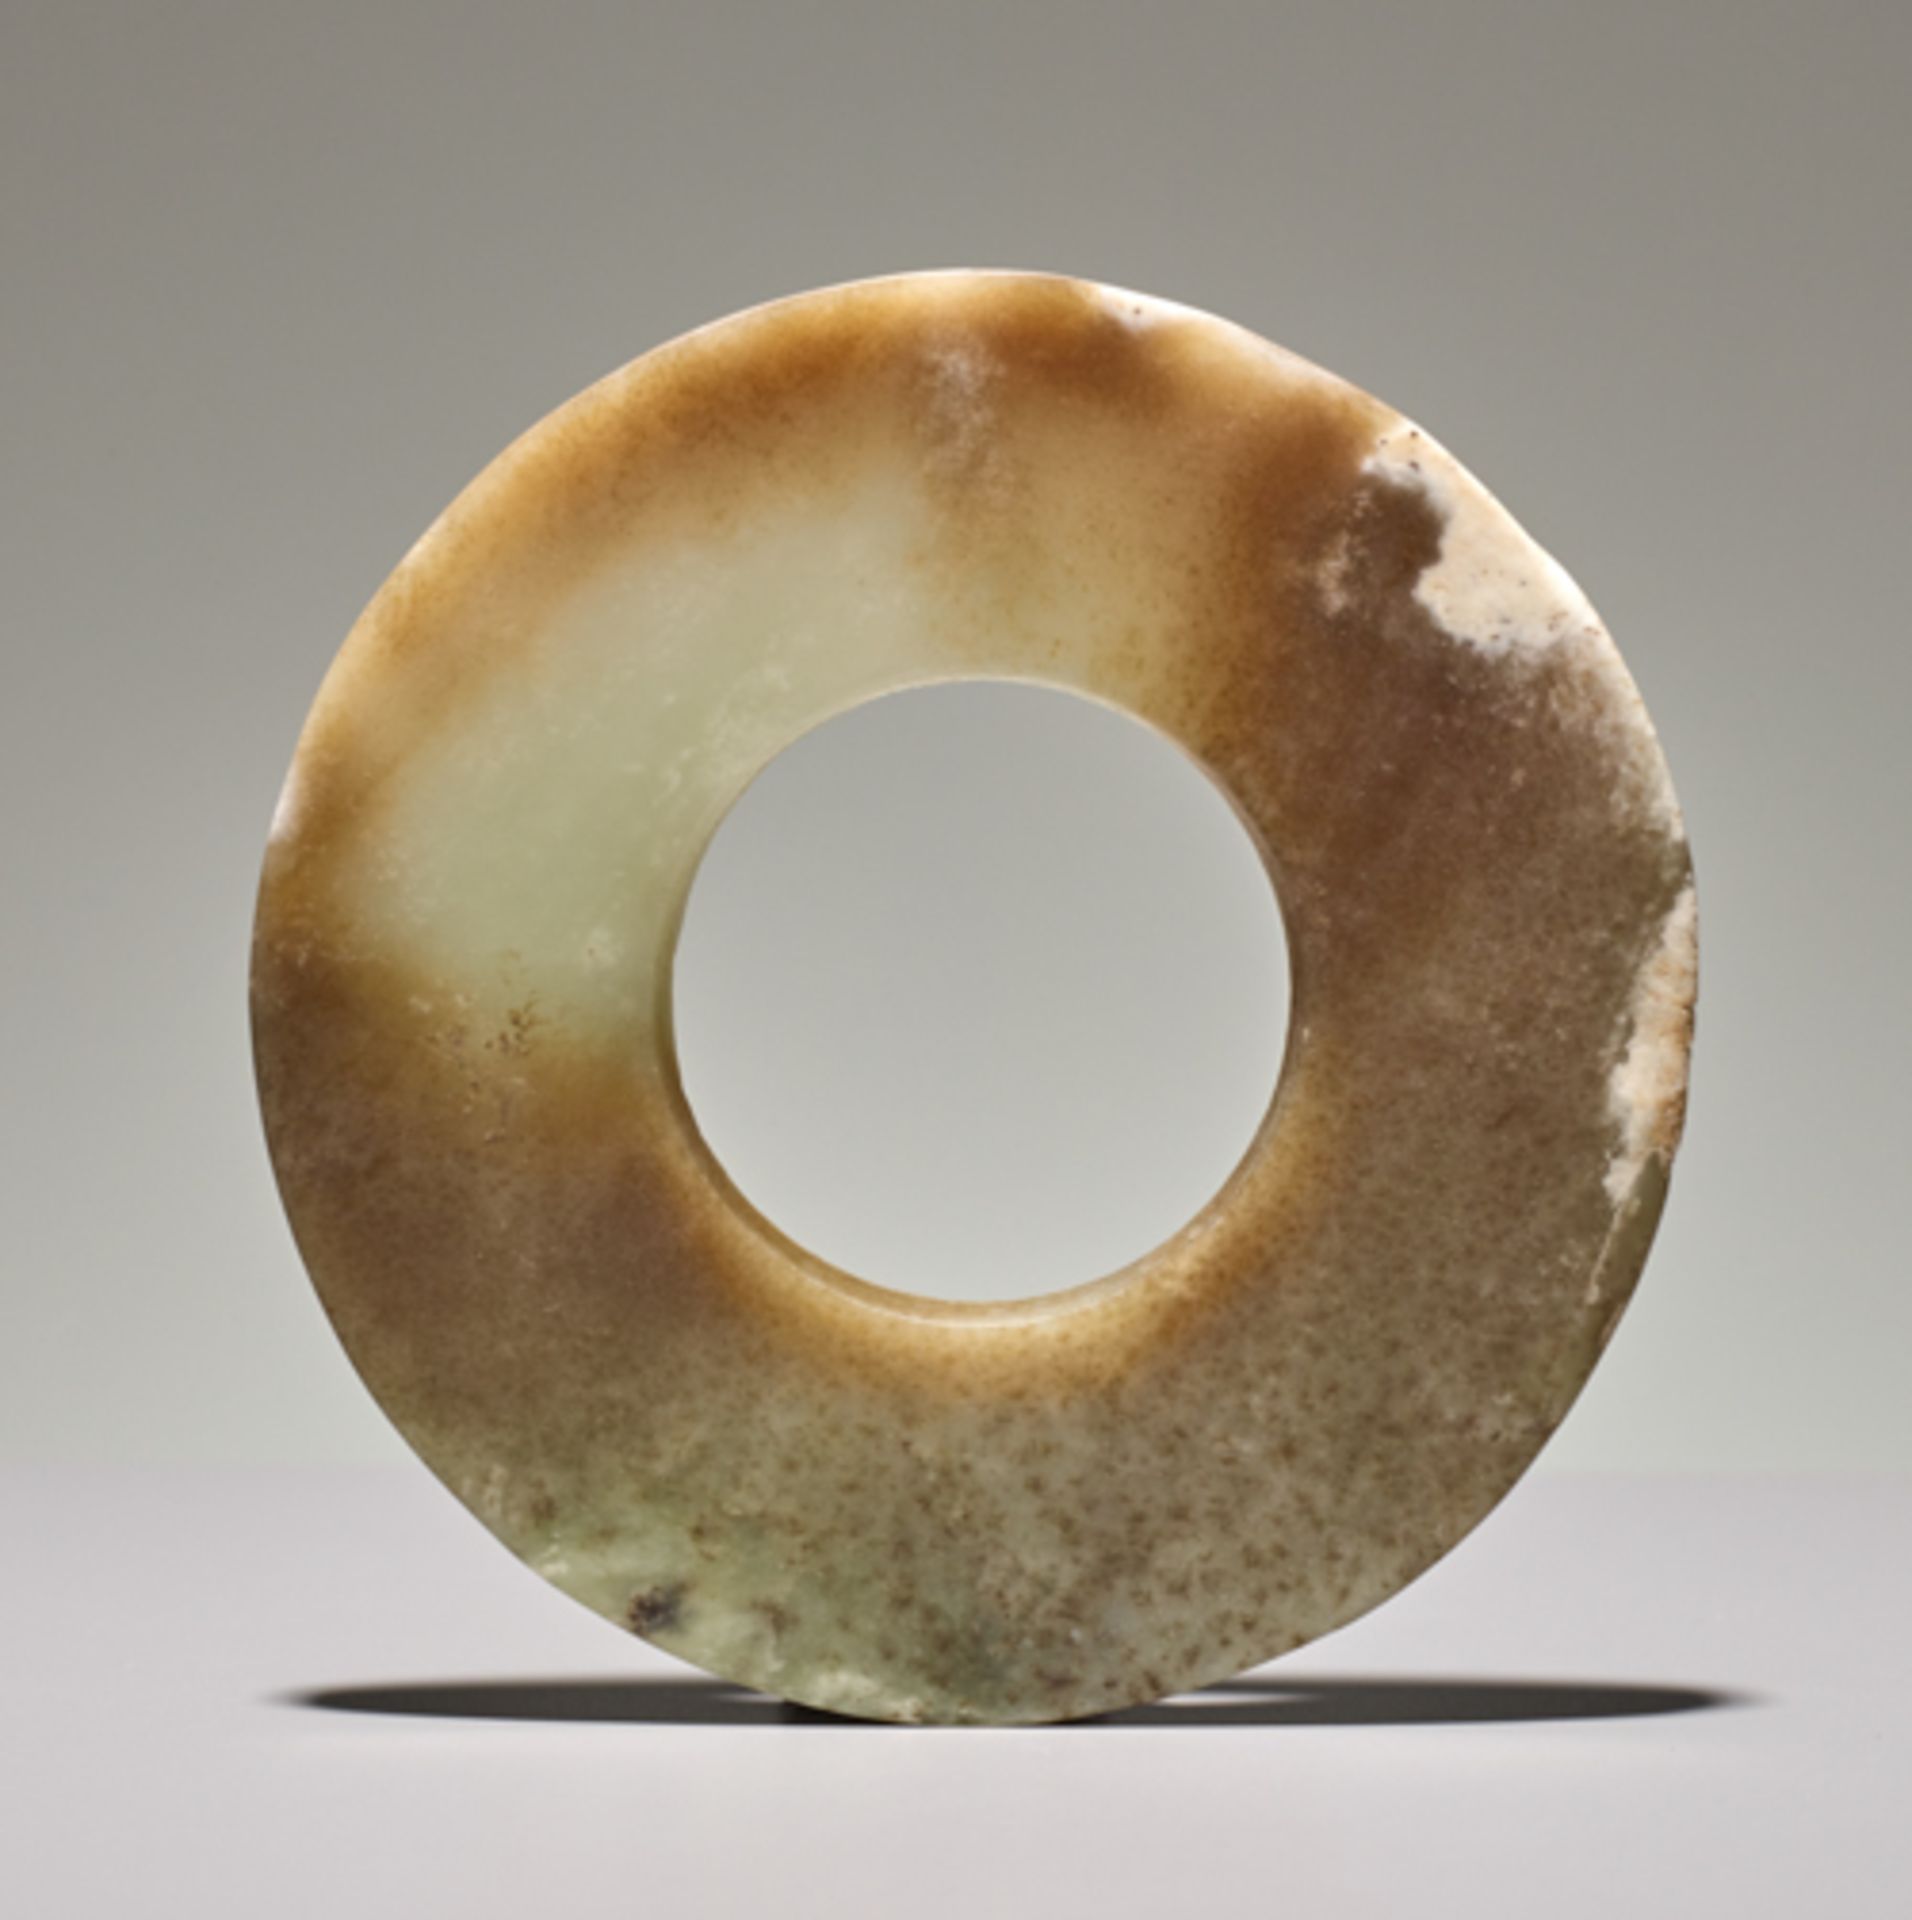 DISC IN SEMI-TRANSLUCENT JADE Jade. China, Late Neolithic period, Qijia culture, c.2200-1900 BC This